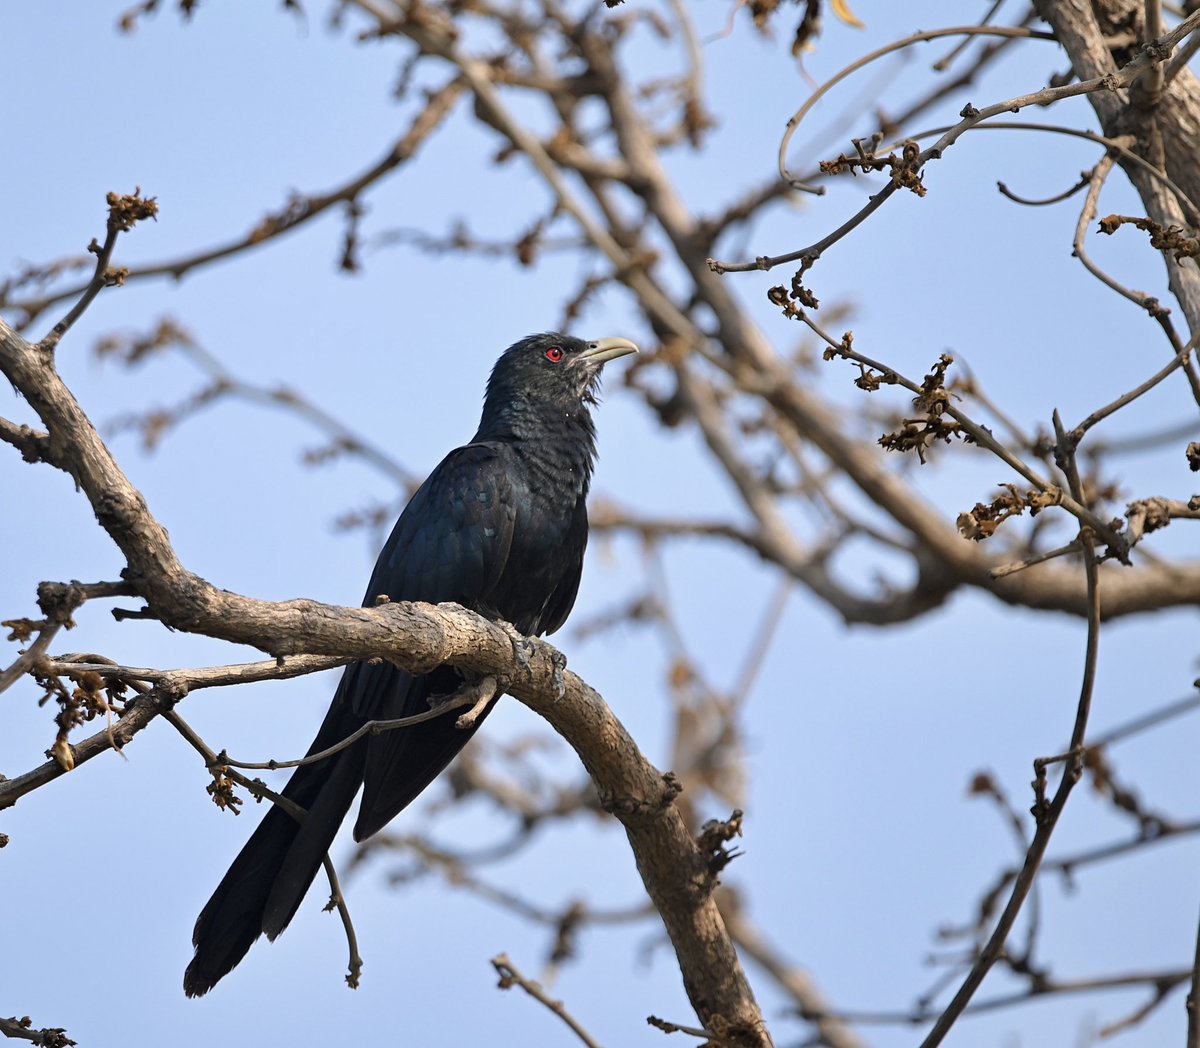 #1499 Asian Koel

Black and beautiful!! 

#dailypic #IndiAves #TwitterNatureCommunity #birdwatching #ThePhotoHour #BBCWildlifePOTD #natgeoindia